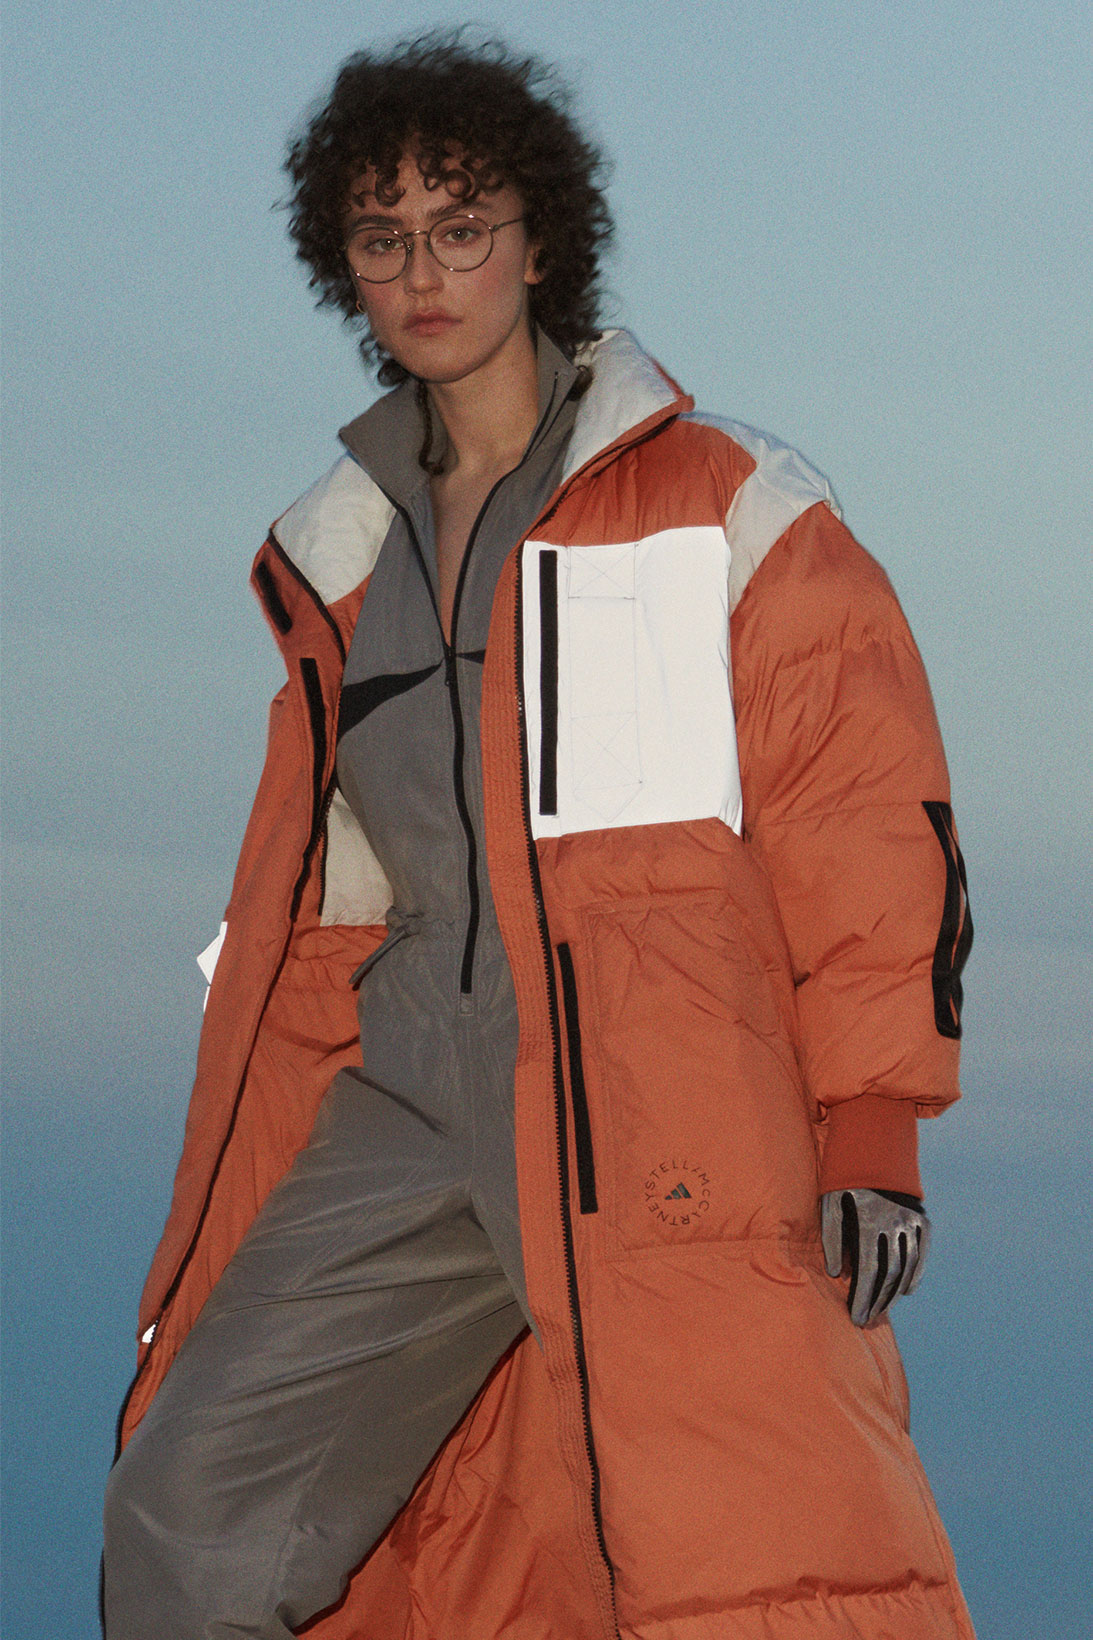 adidas by Stella Mccartney посвятил зимнюю кампанию природе и путешествиям